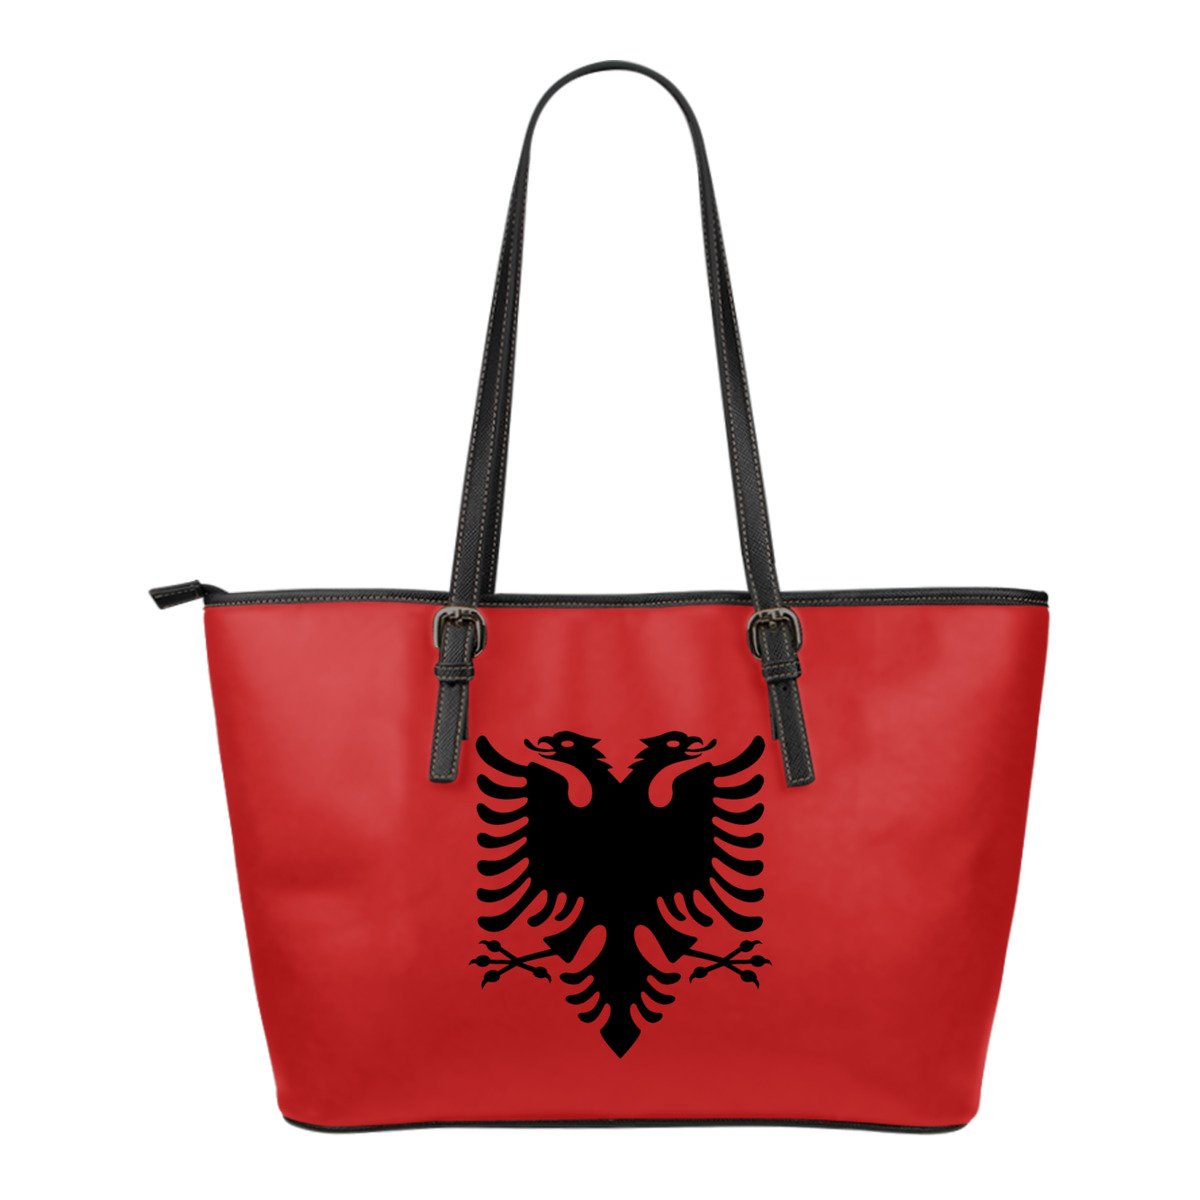 albania-small-leather-tote-bag